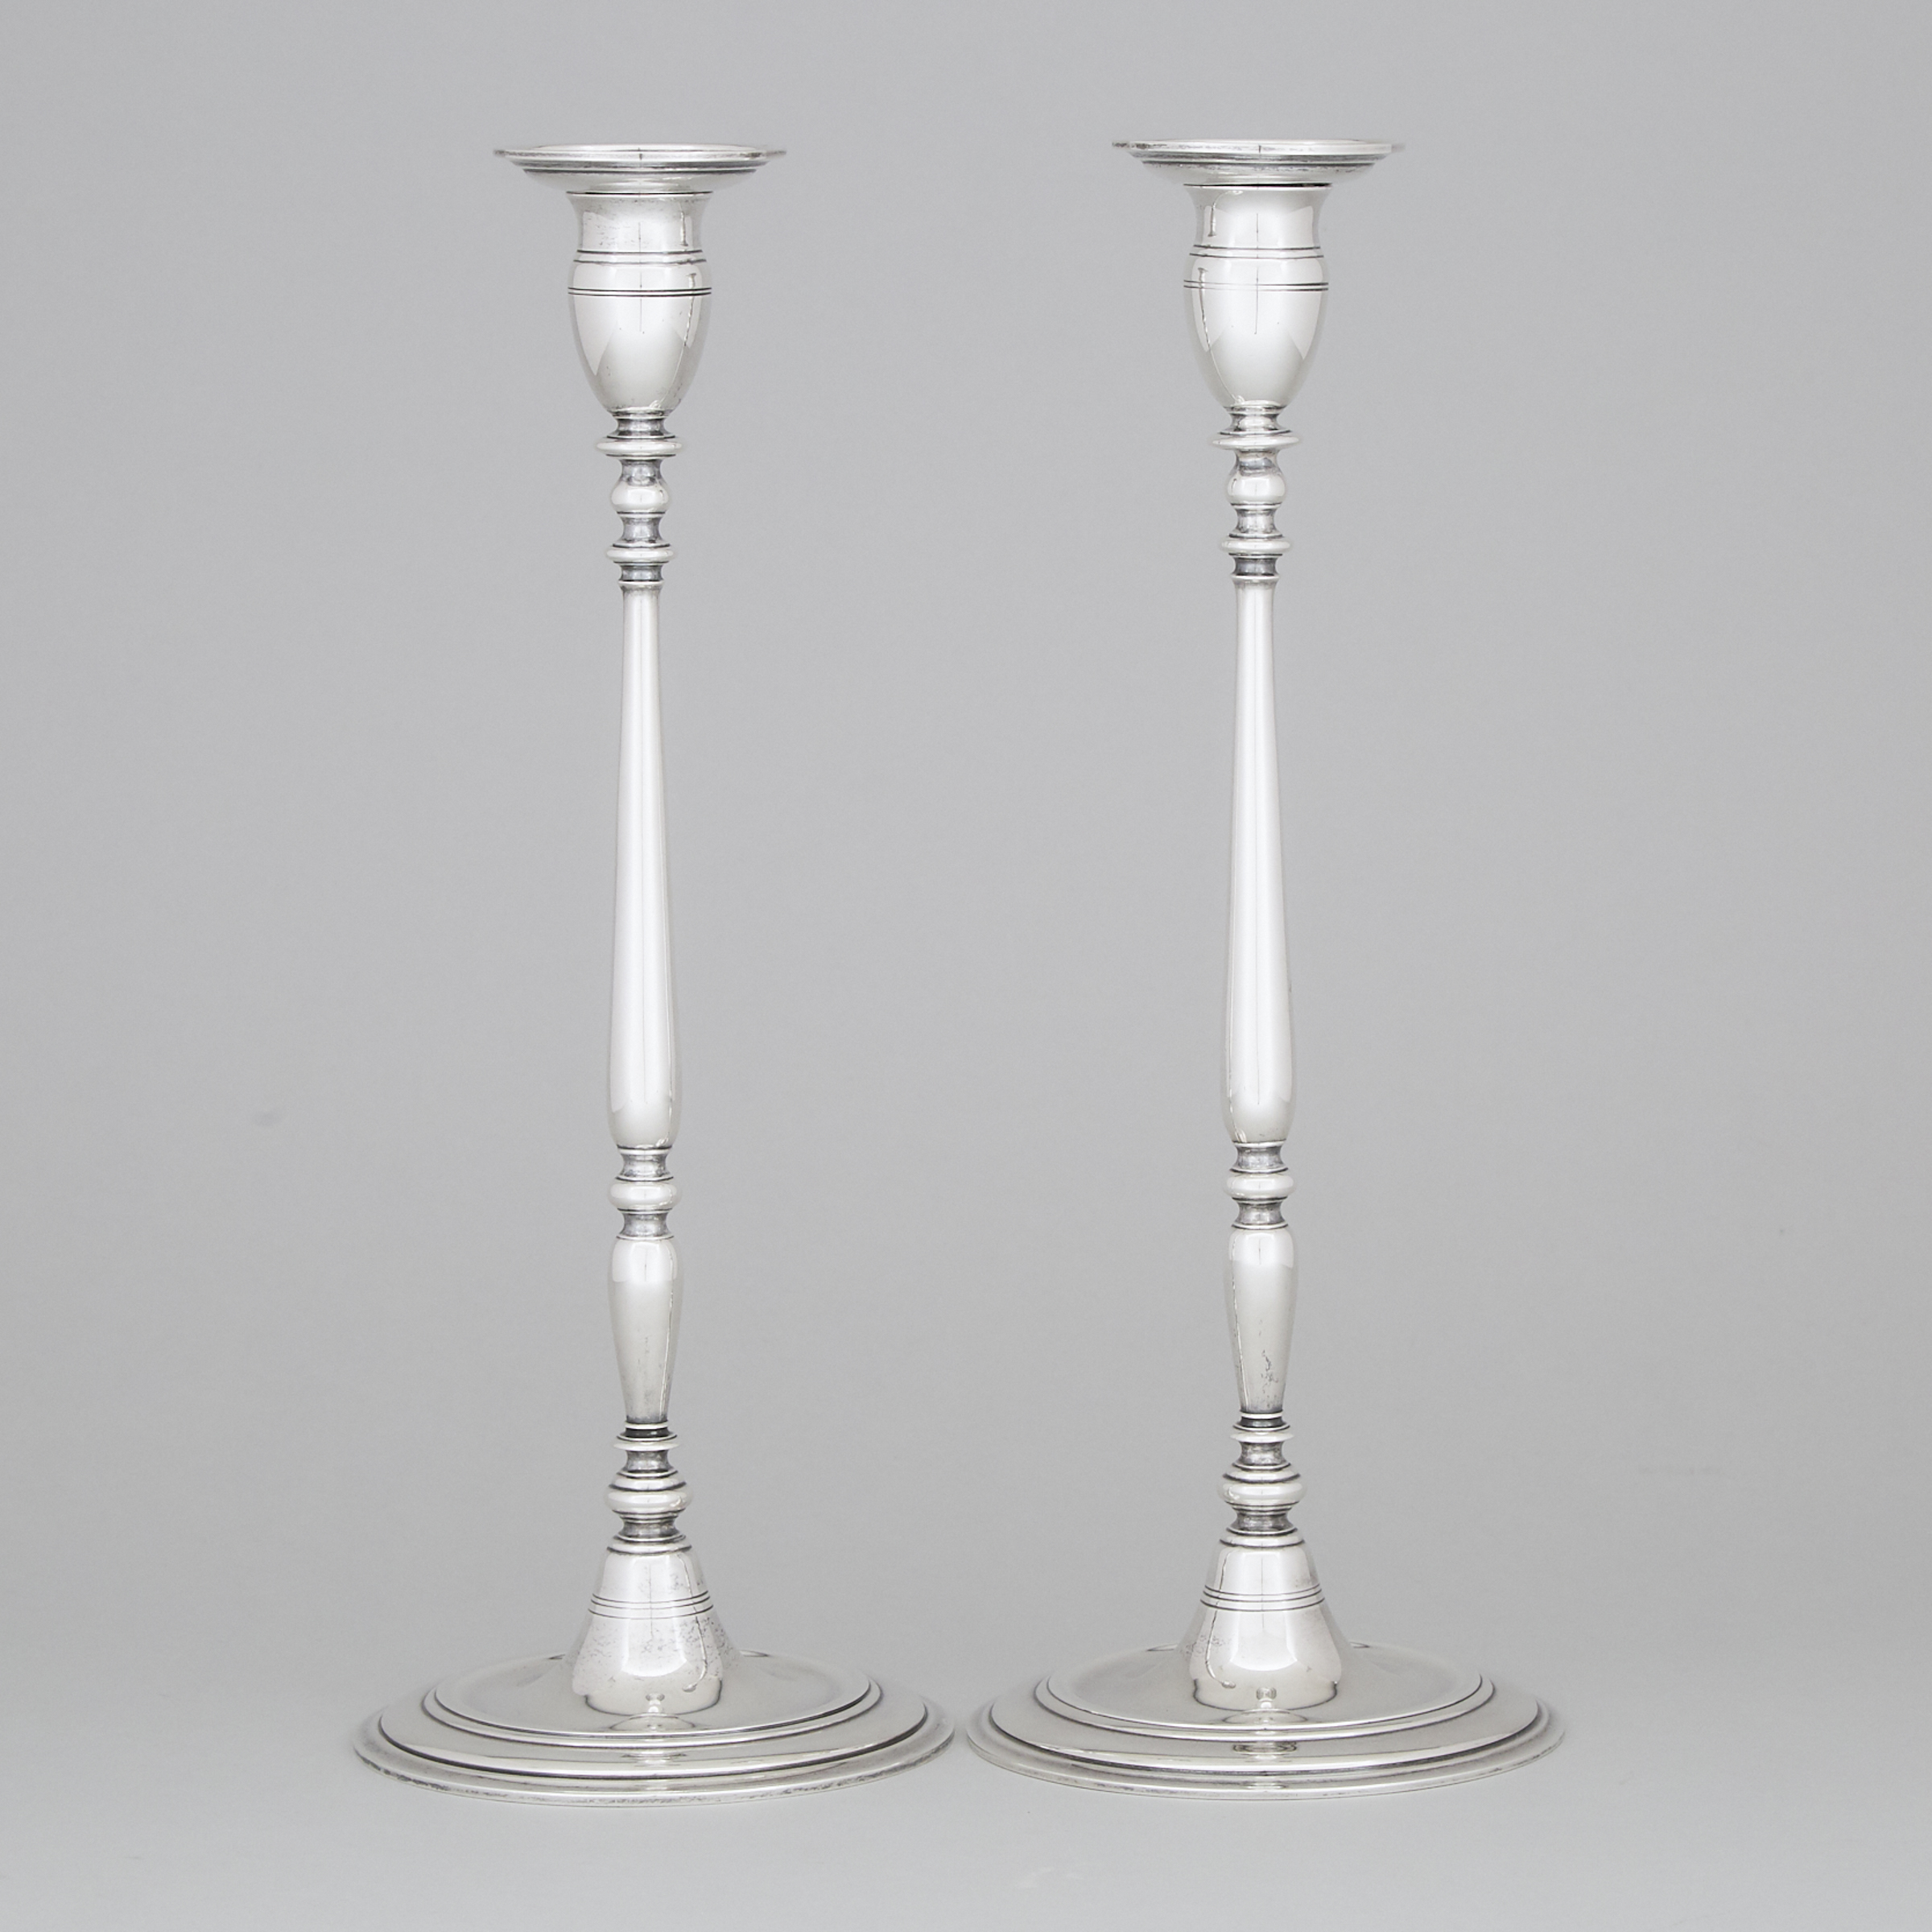 Pair of American Silver Candlesticks, Tiffany & Co., New York, N.Y., c.1907-38